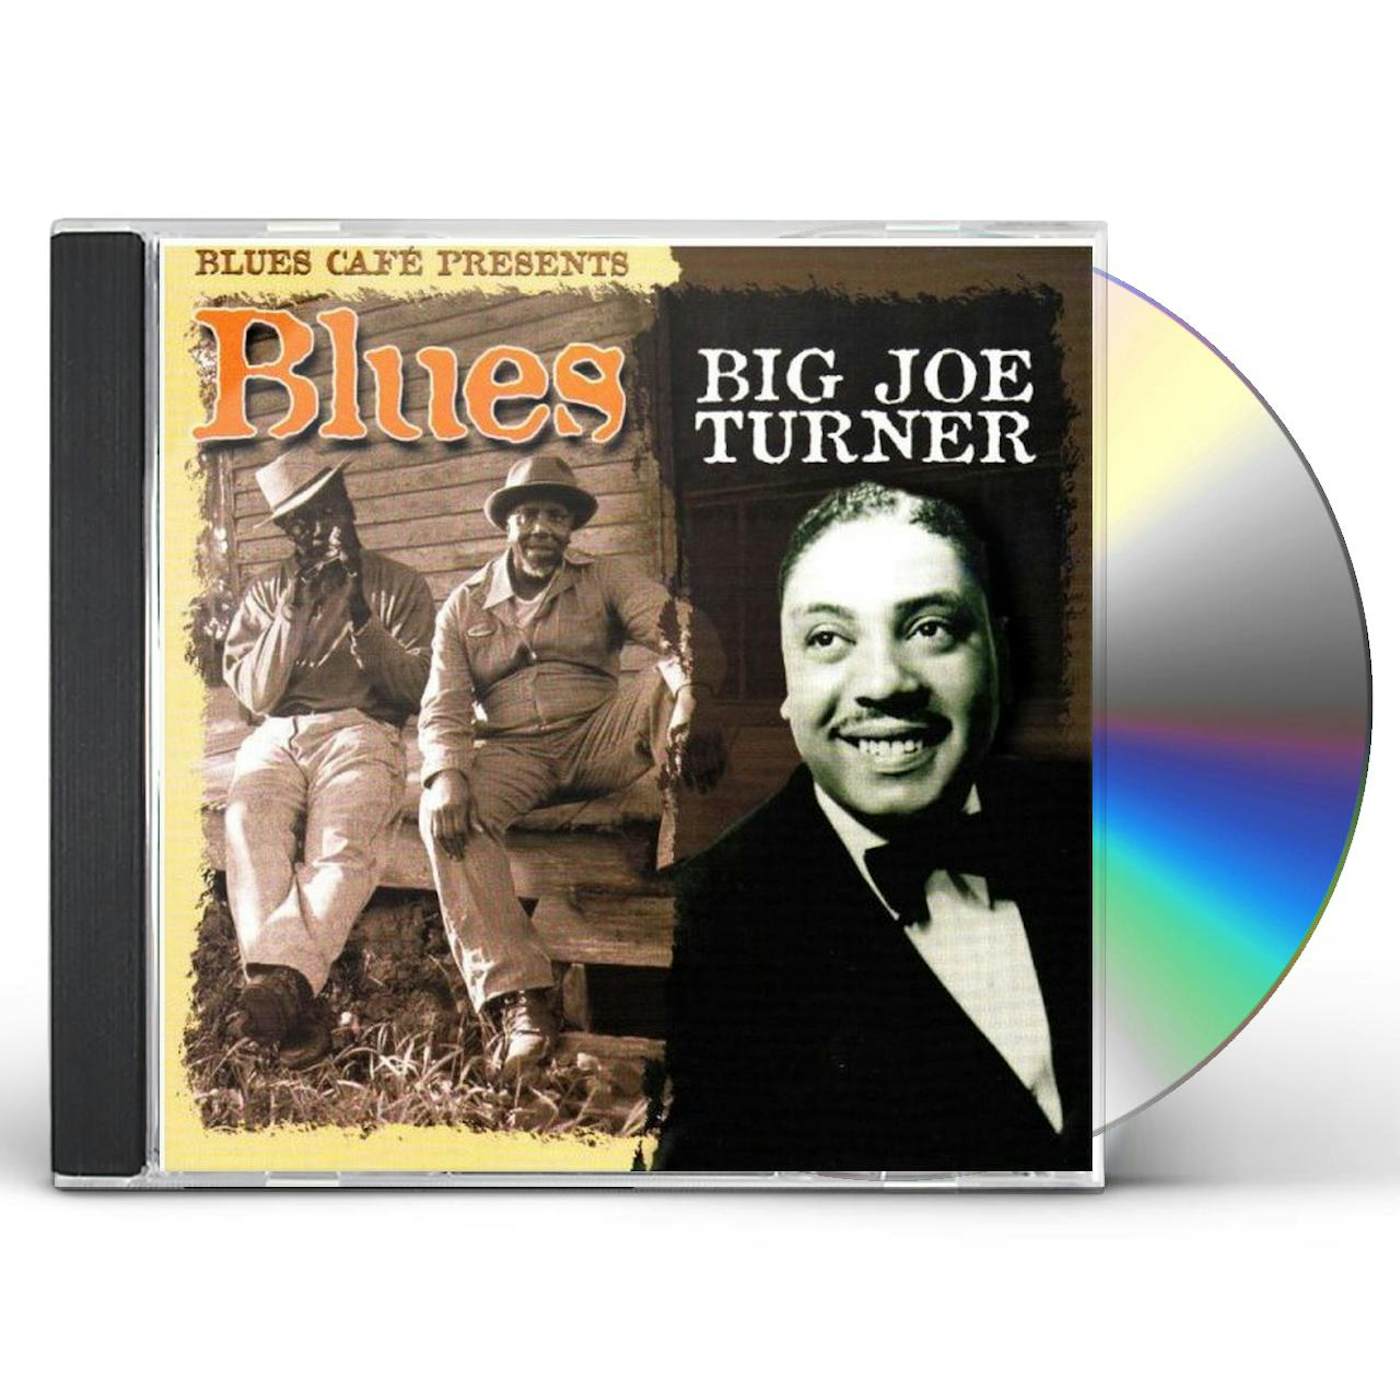 BLUES CAFE PRESENTS BIG JOE TURNER CD